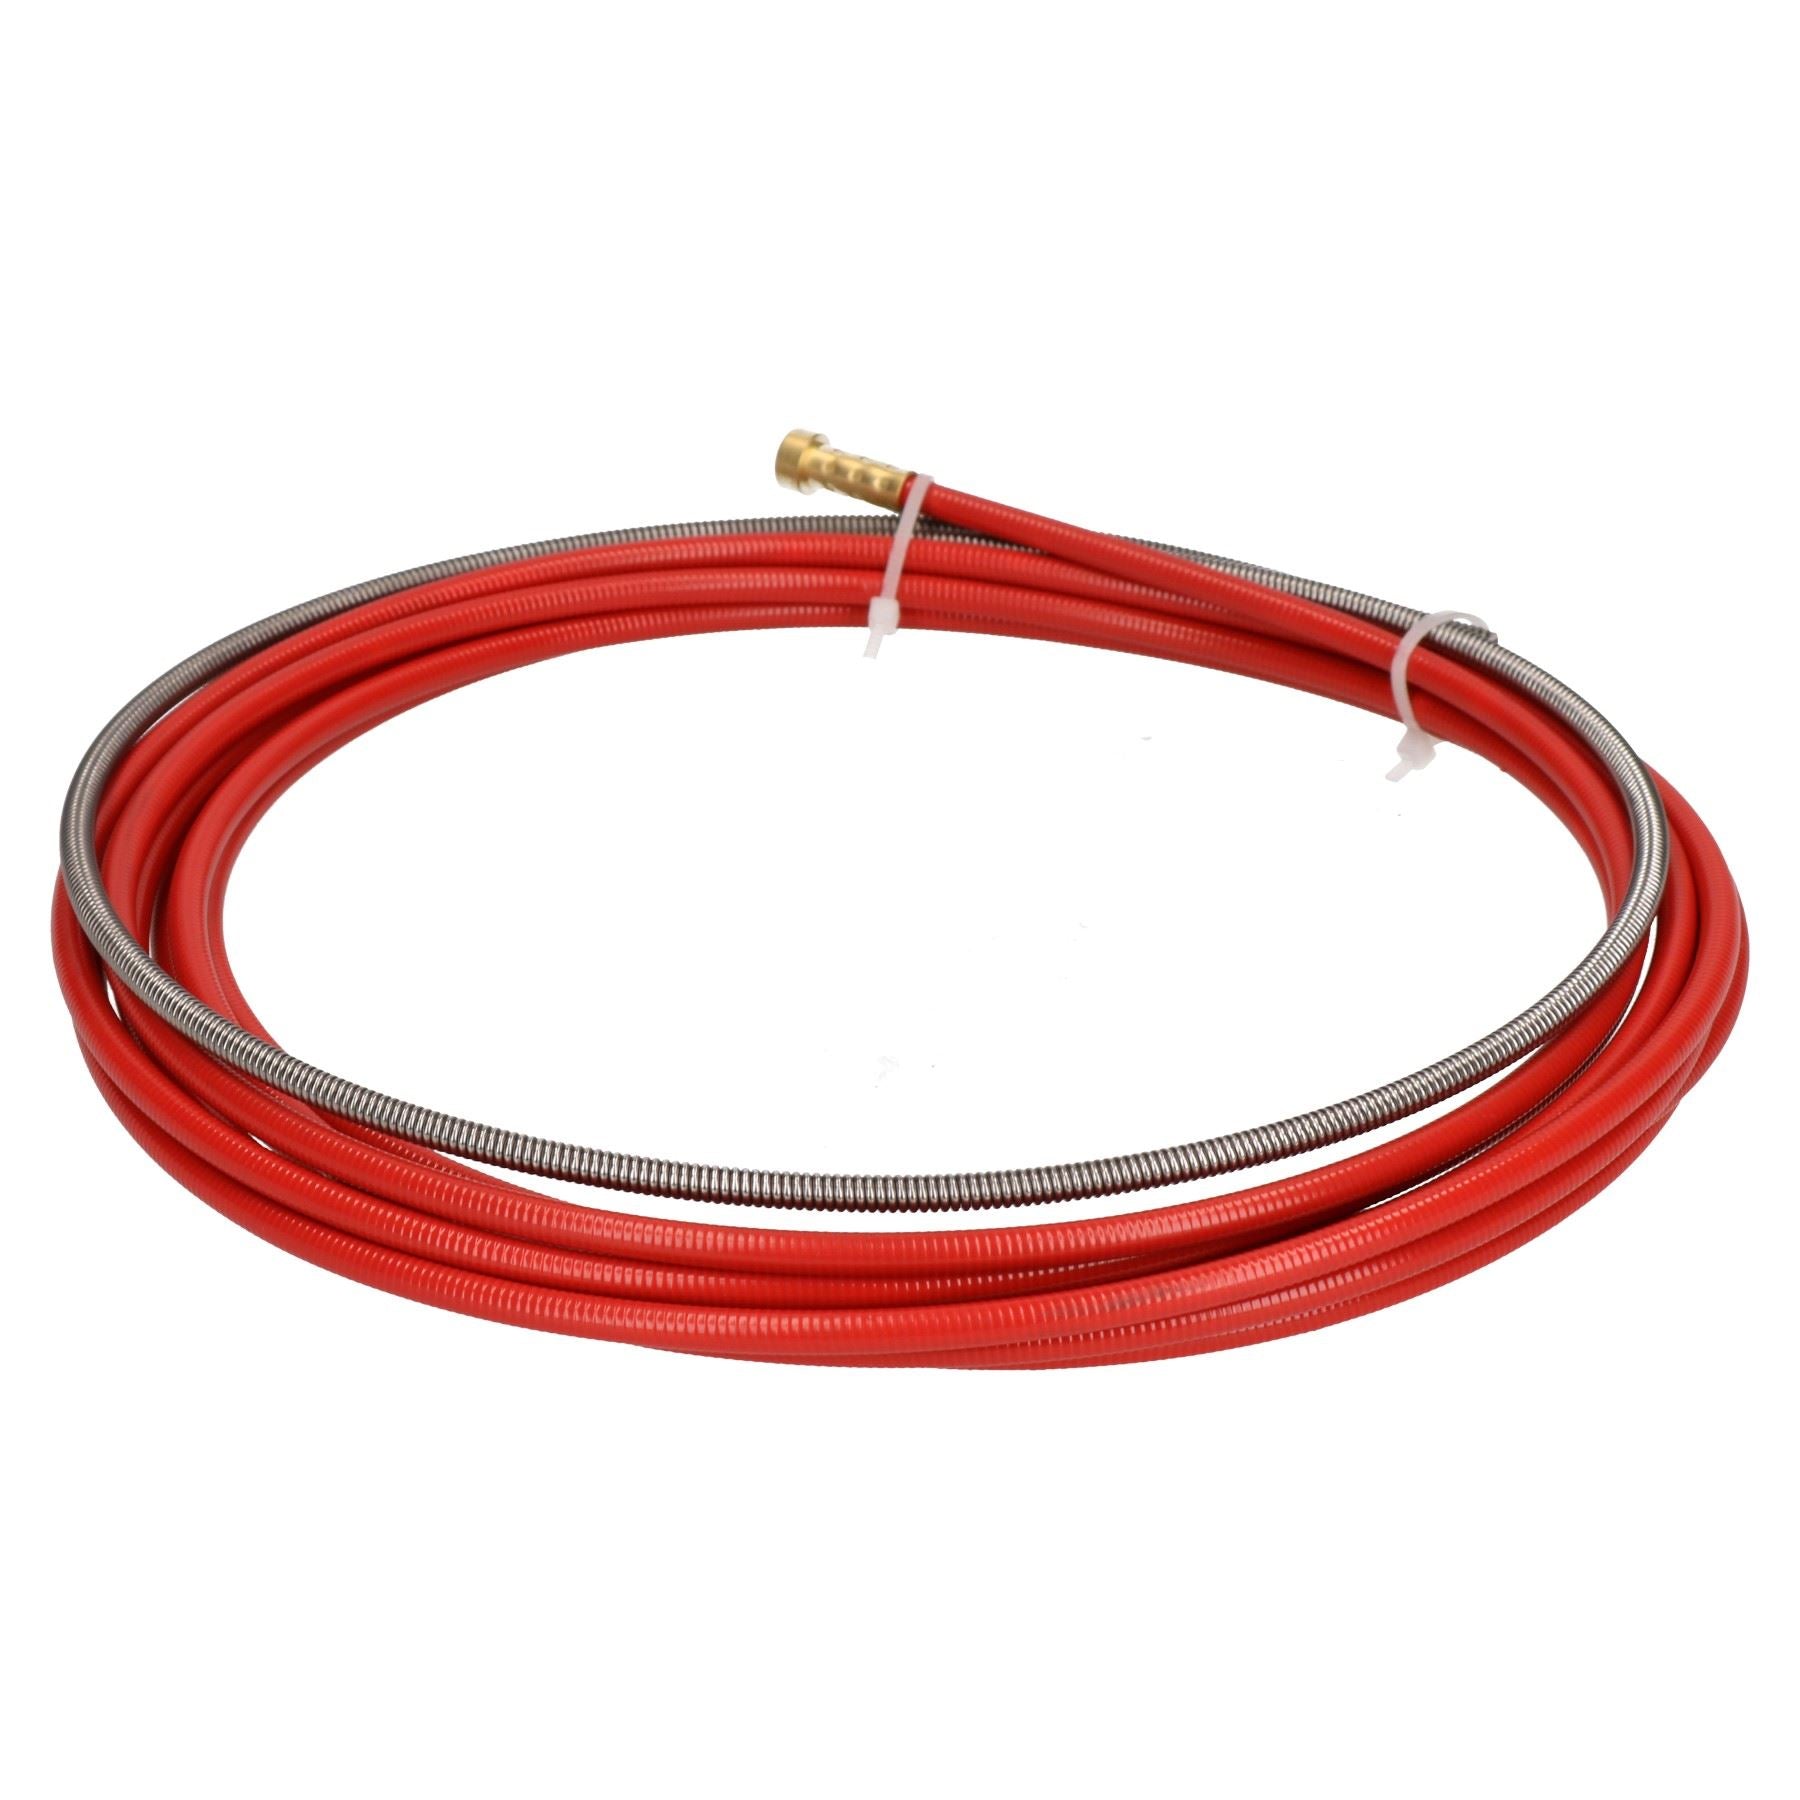 P.C. Liner Wire 1.0 - 1.2mm x 4M Welding Red Steel Plastic Coated MIG Torch